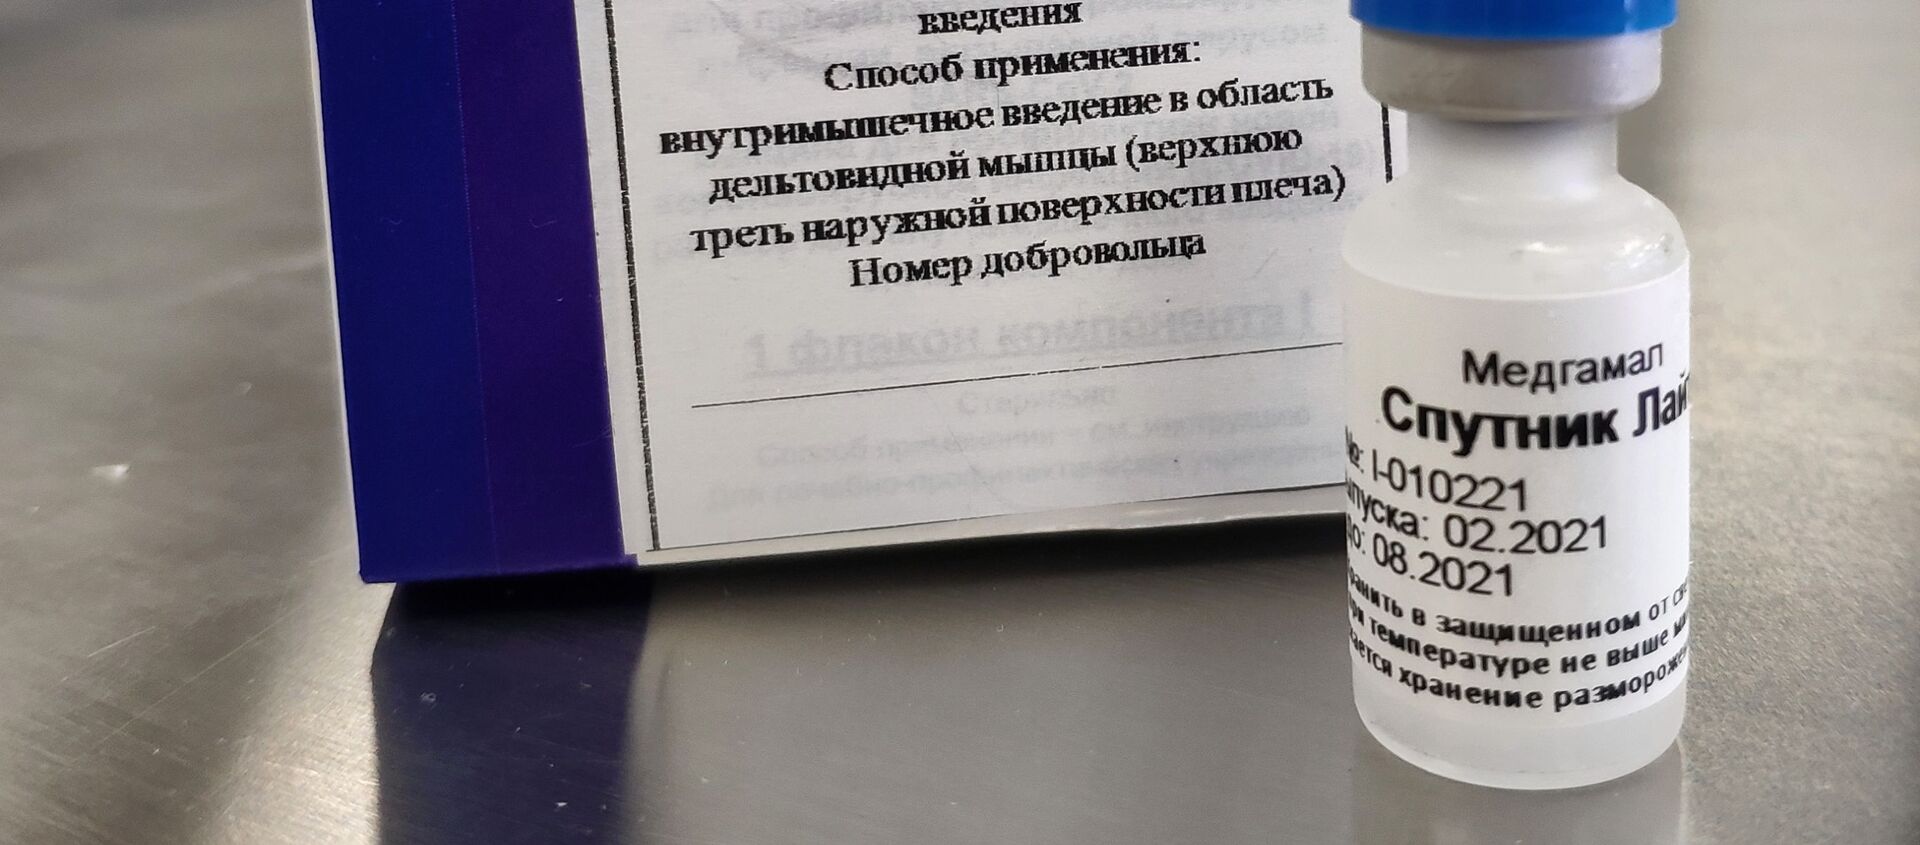 Упаковка однокомпонентной вакцины от COVID-19 Спутник Лайт - 俄罗斯卫星通讯社, 1920, 02.04.2021